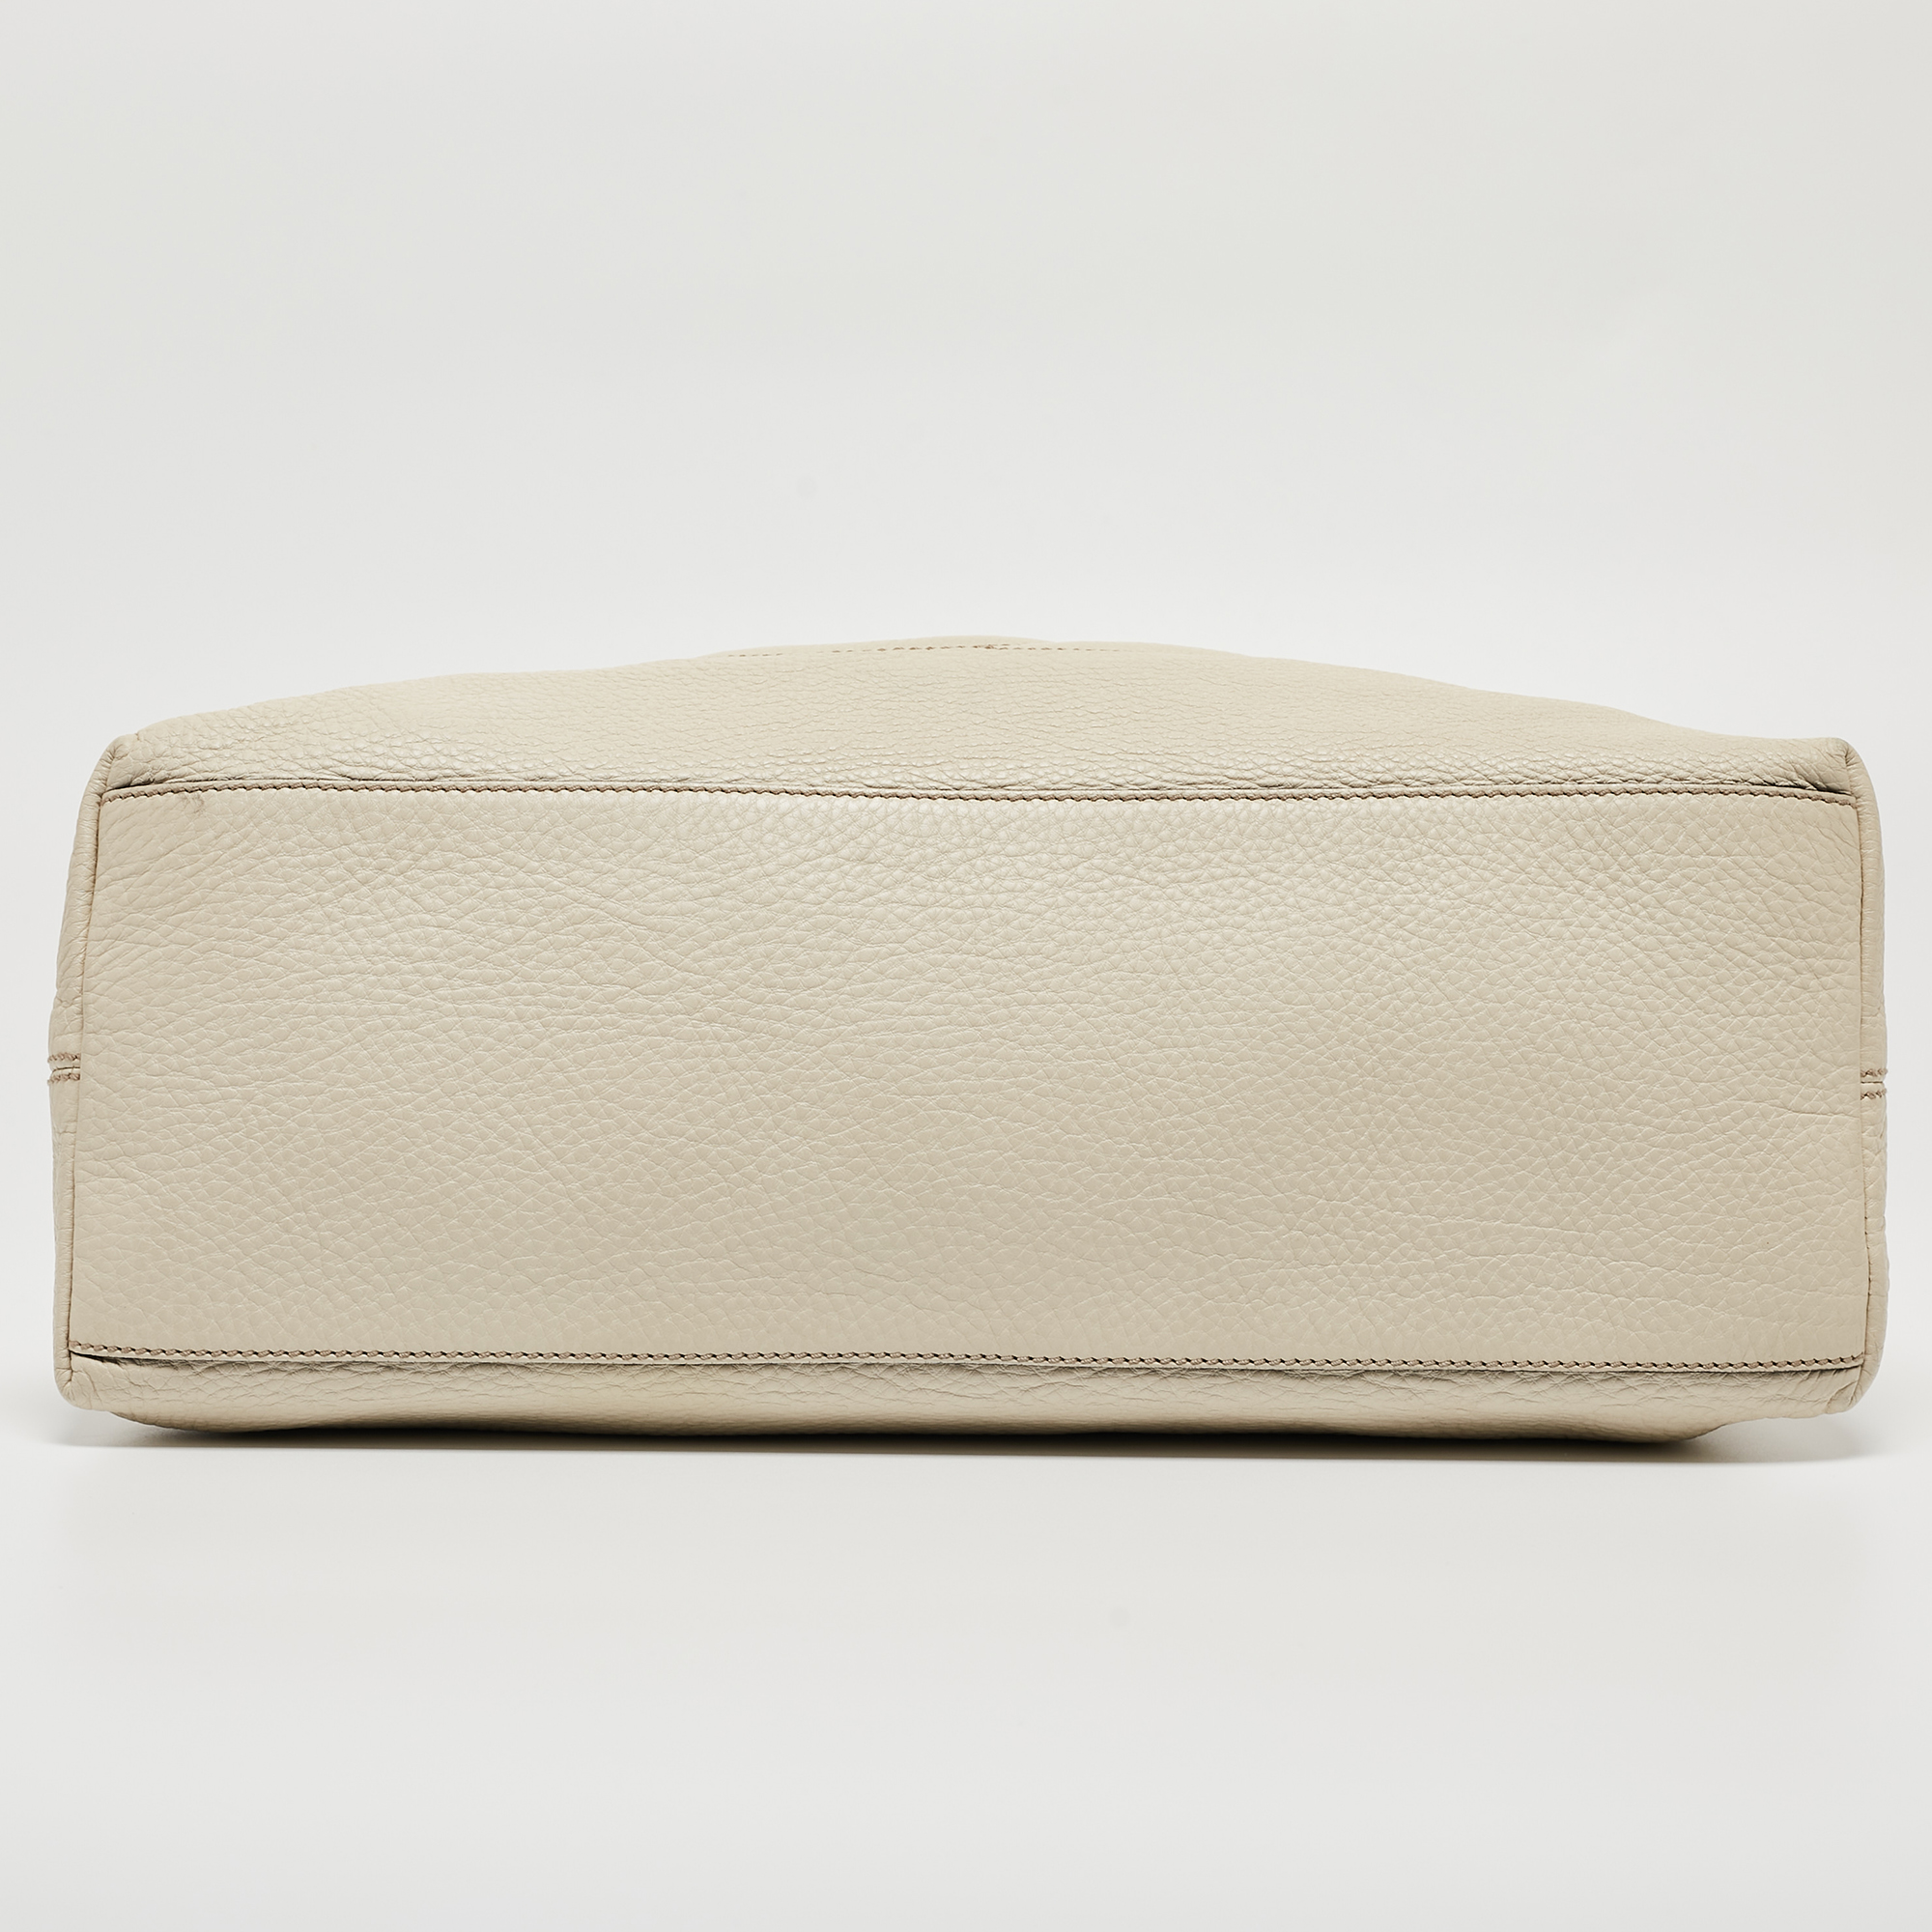 Gucci Off-White Leather Medium Chain Soho Shoulder Bag